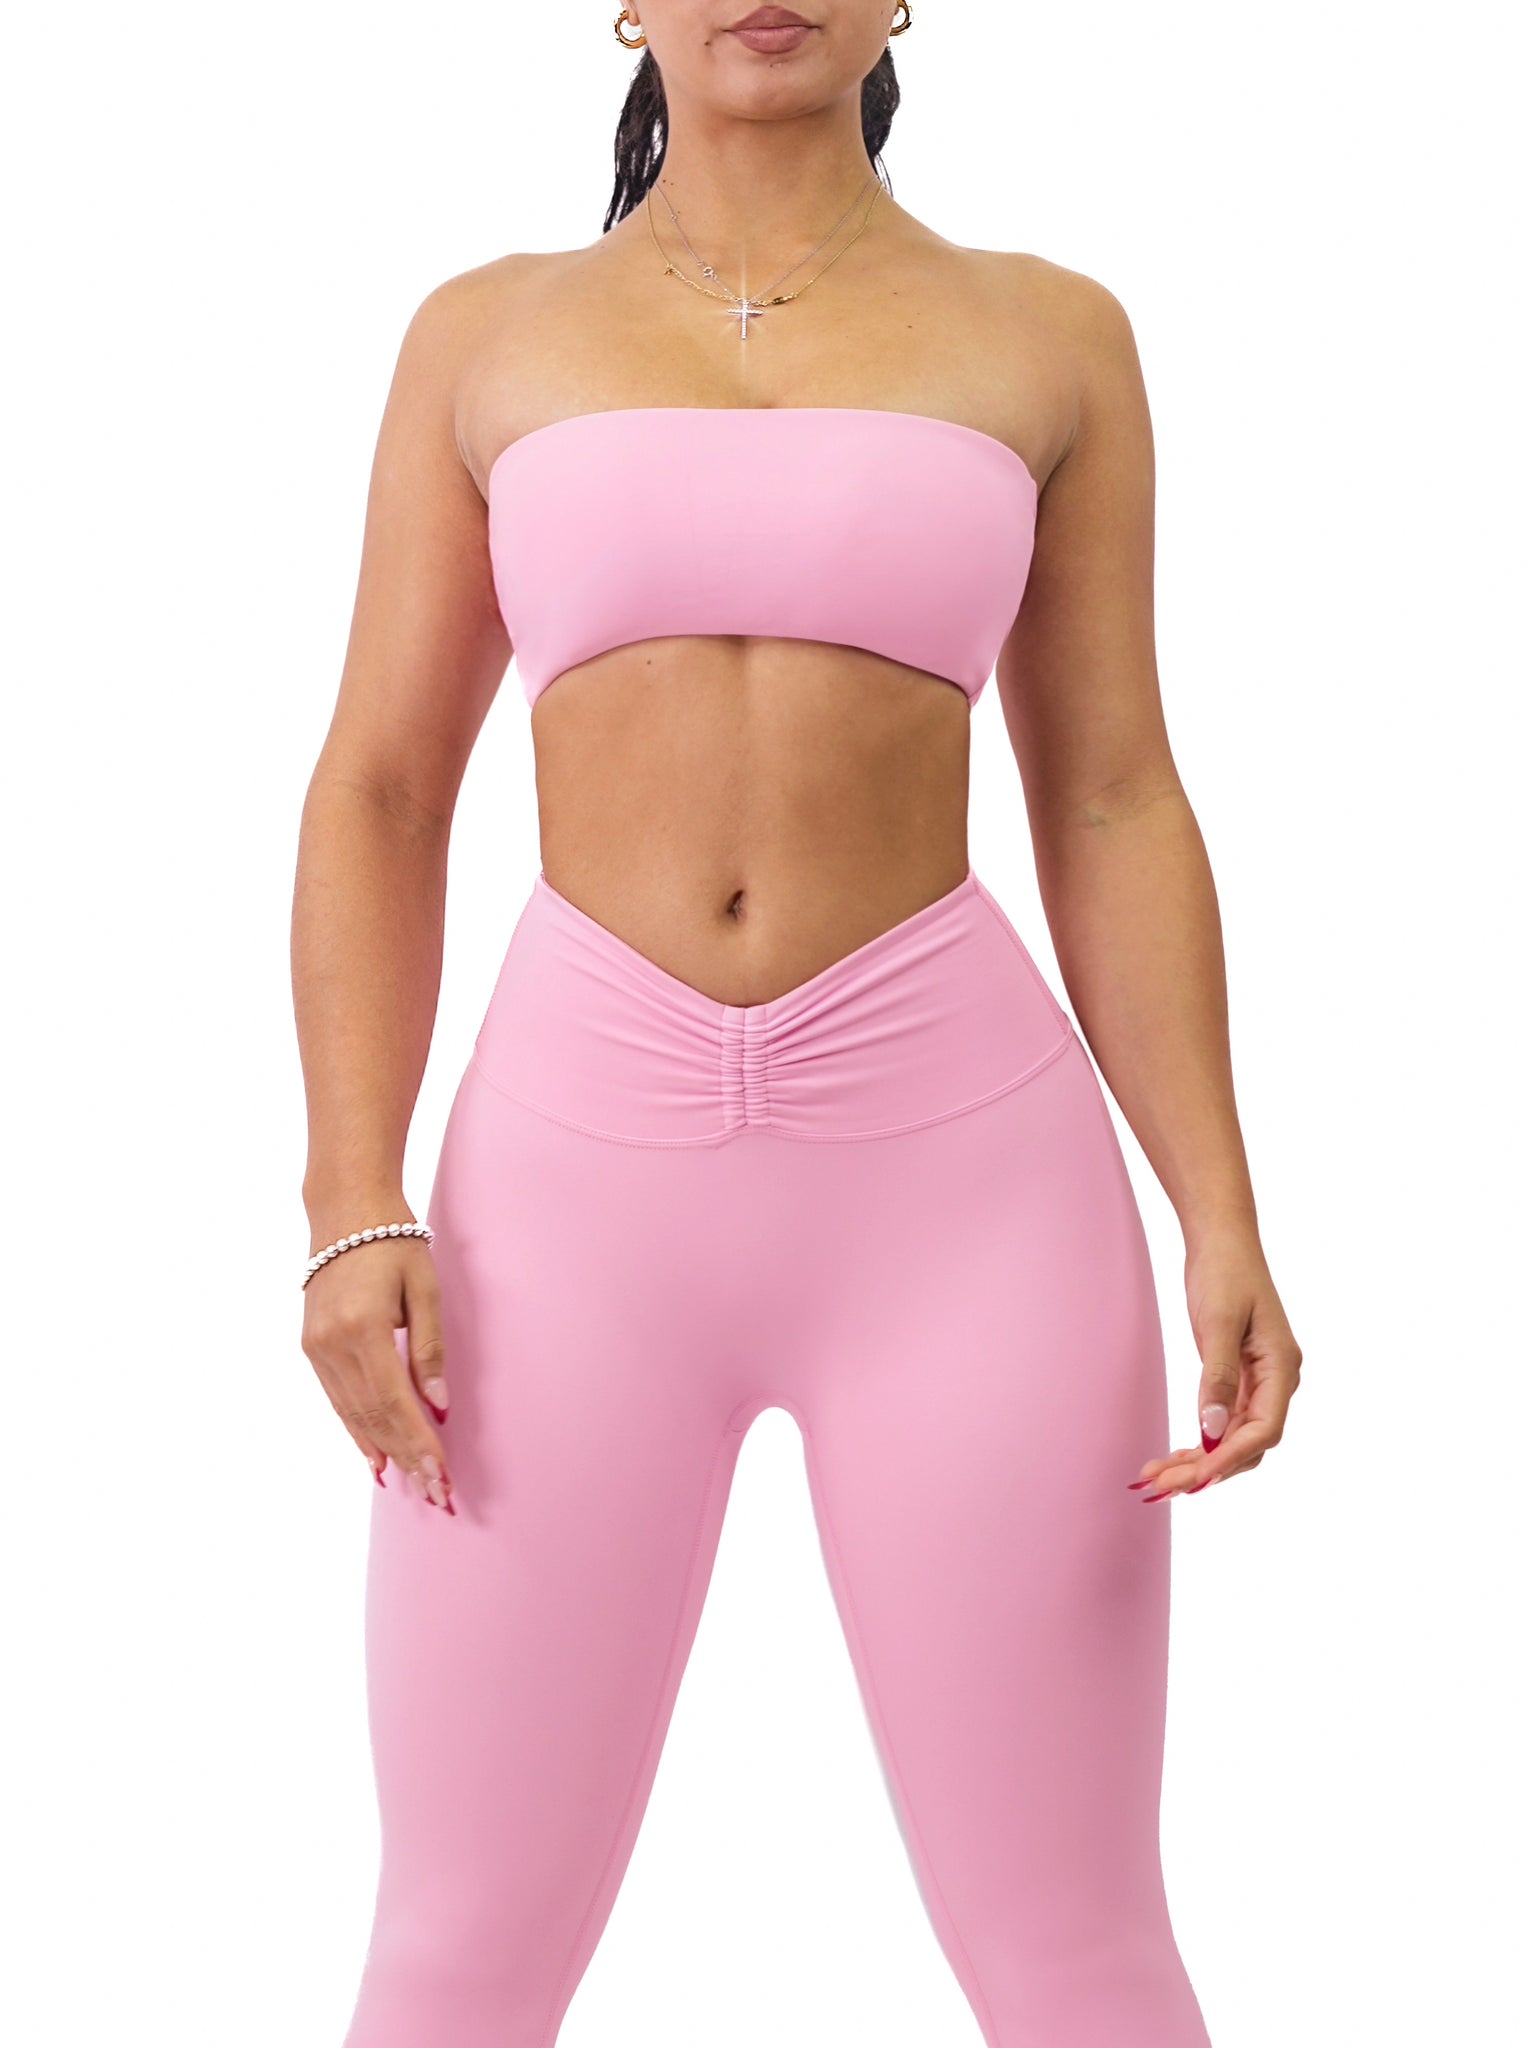 Tube Top Sports Bra (Blush Pink) – Fitness Fashioness